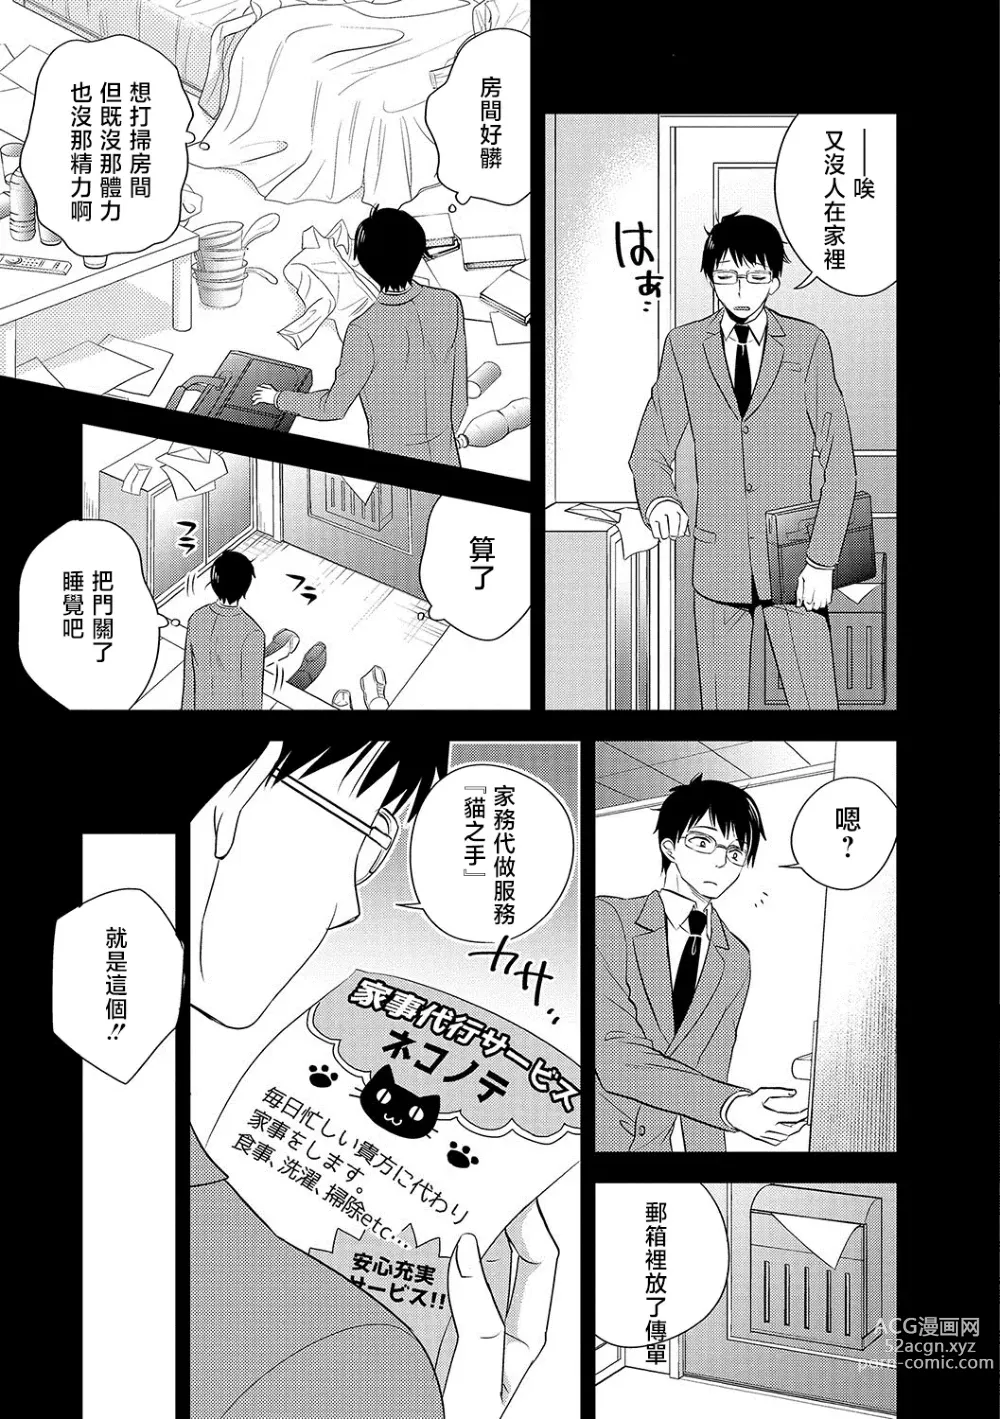 Page 3 of manga Kanojo no Aijou Manten Service